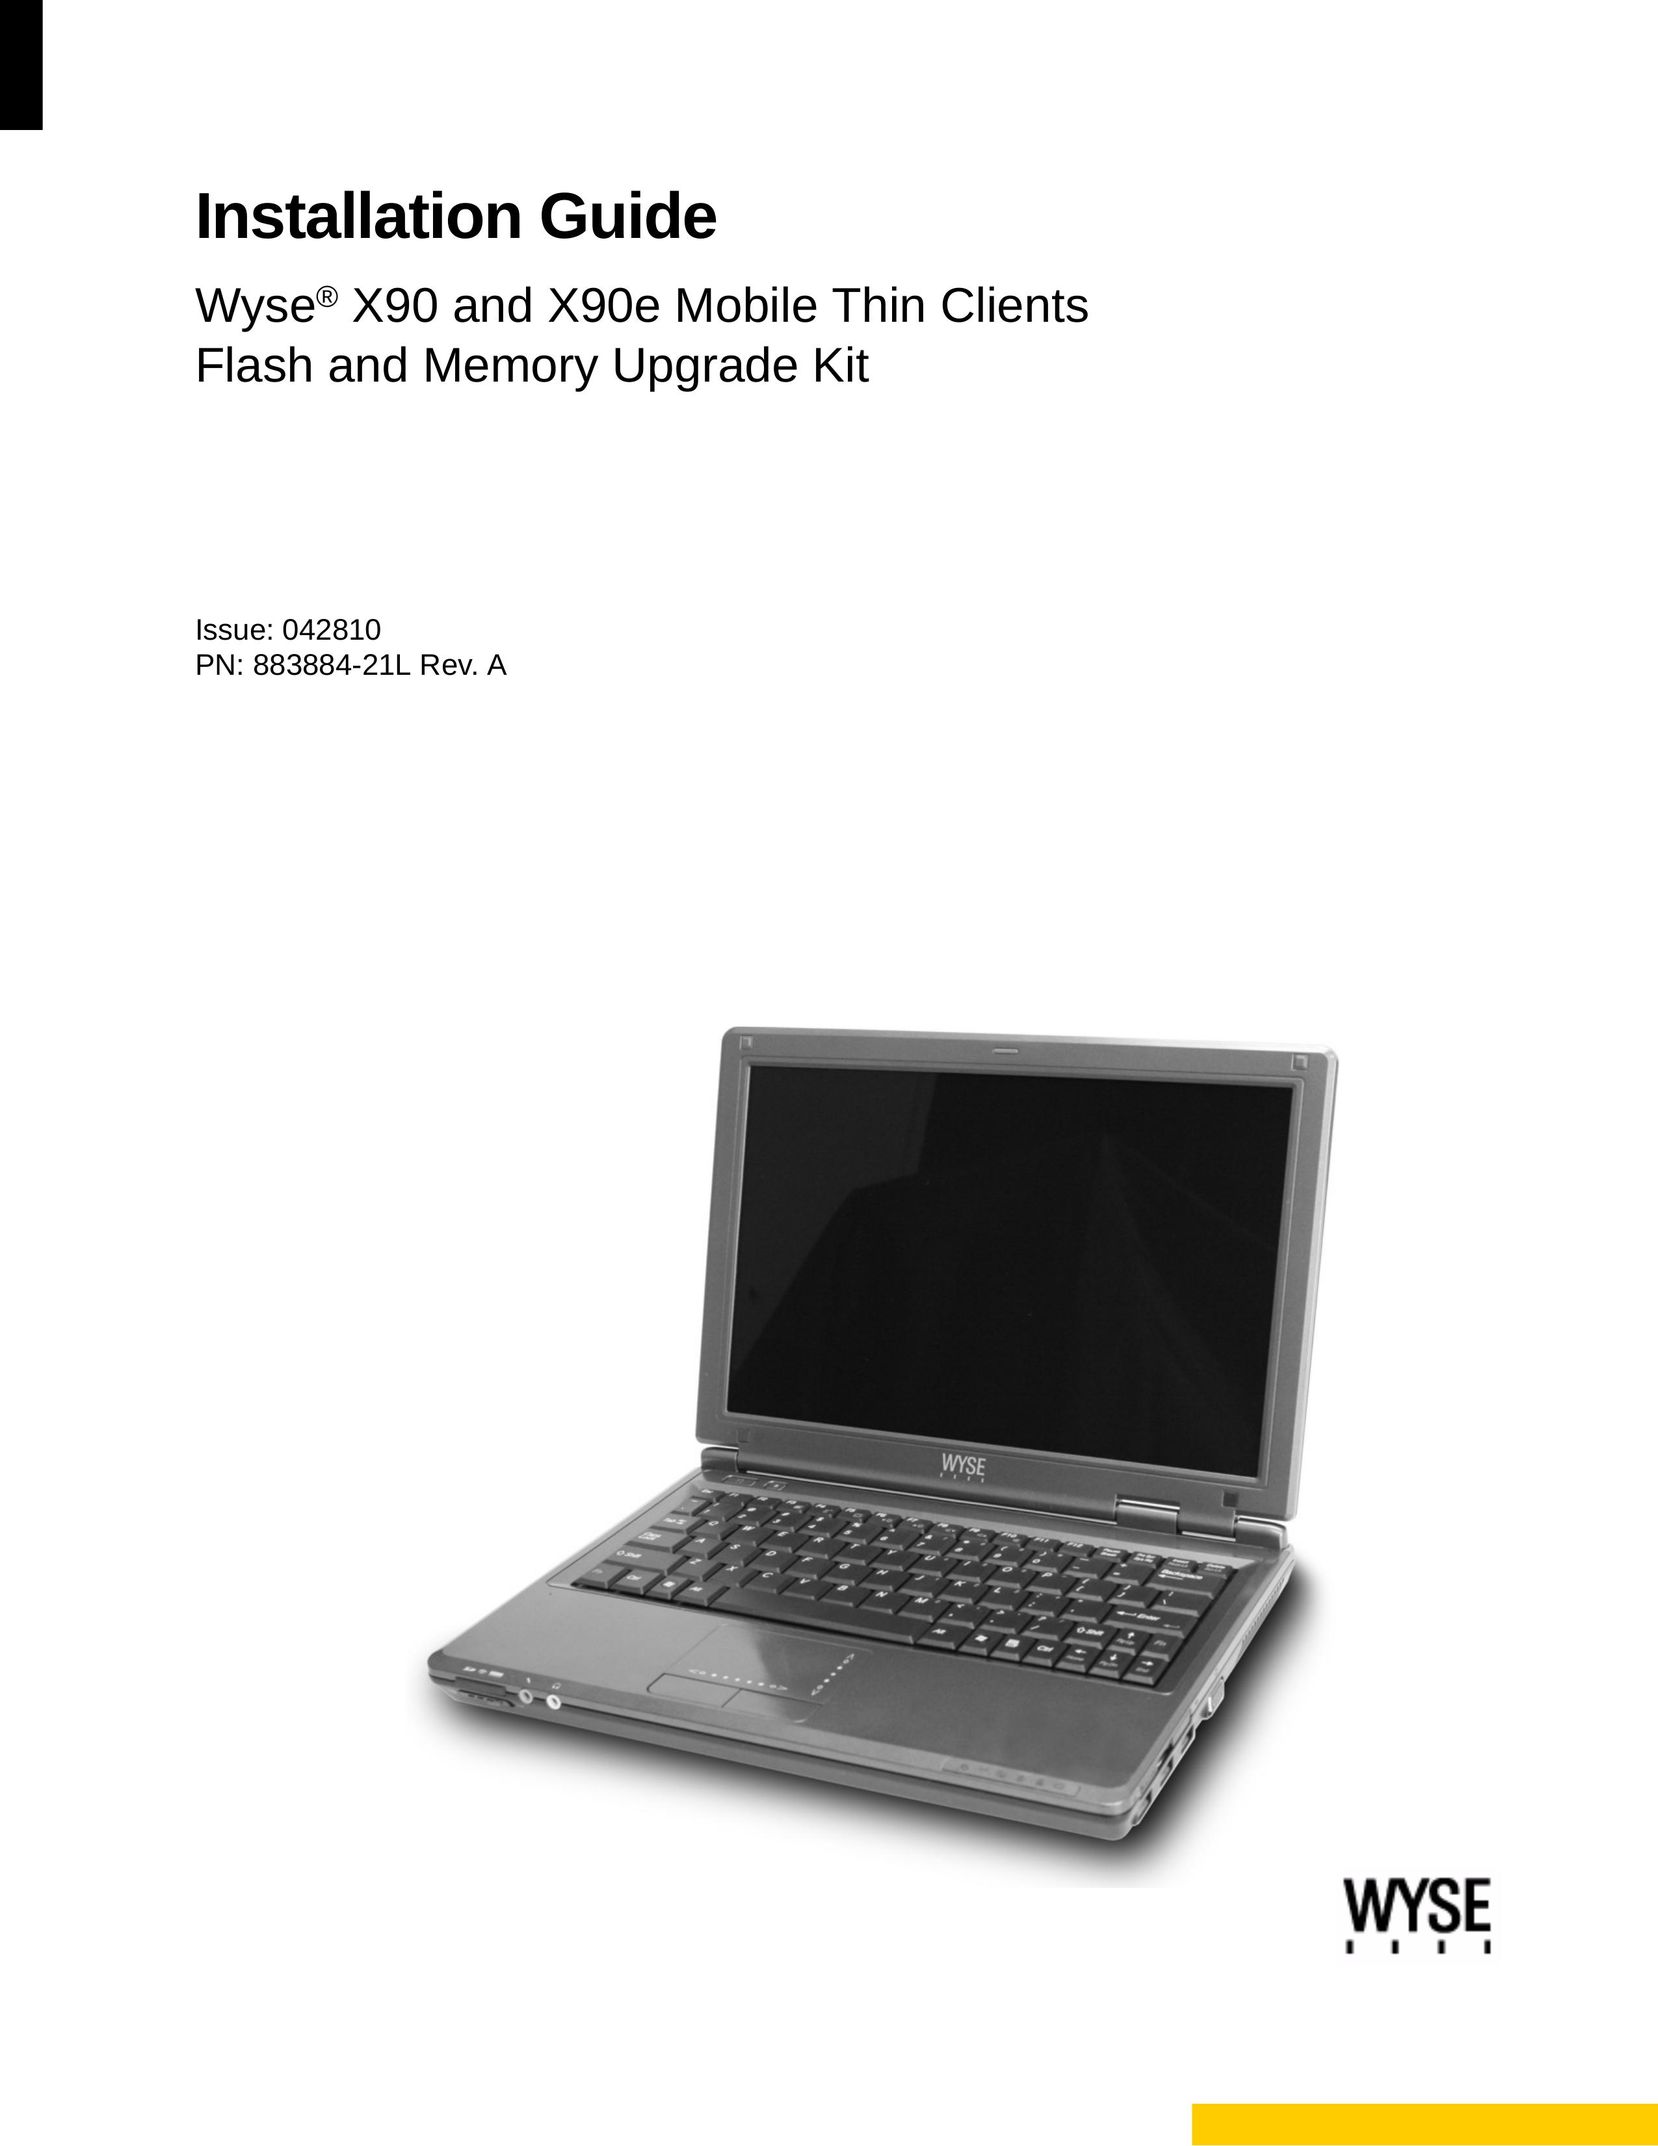 Wyse Technology X90e Computer Drive User Manual